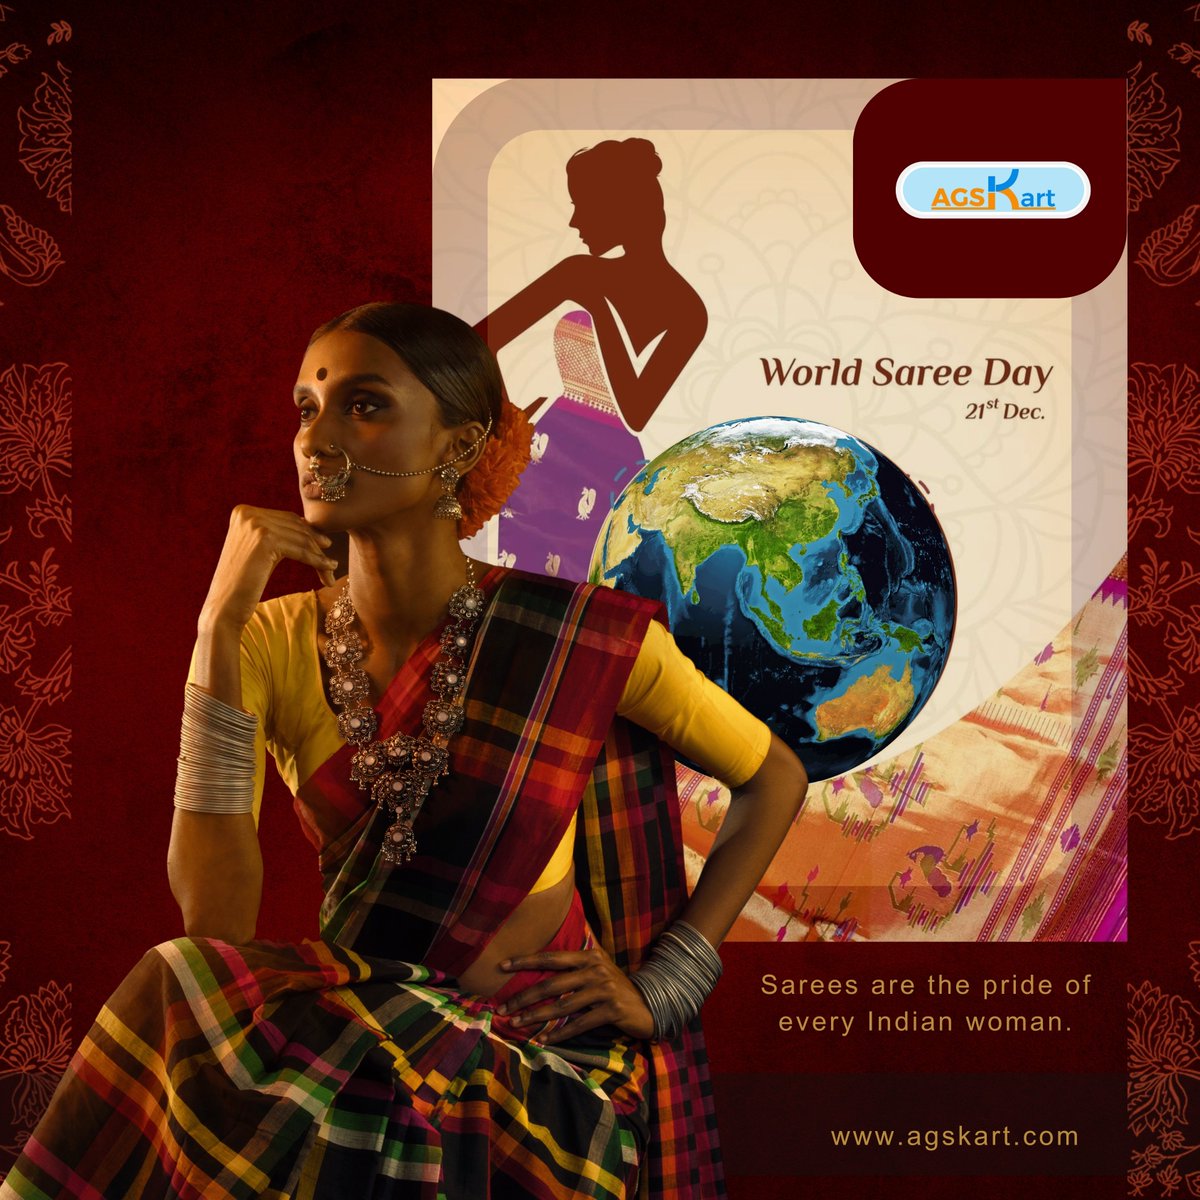 'World Saree Day'
Sarees are the pride of every Indian woman. 
#worldsareeday #sareeday #day #days #saree #sareelove #world #sareefashion #pride #indian #indianwomen #sarees #fashionmodel #fashionstyle #fashiondesigner #sareeindia #sareestyle